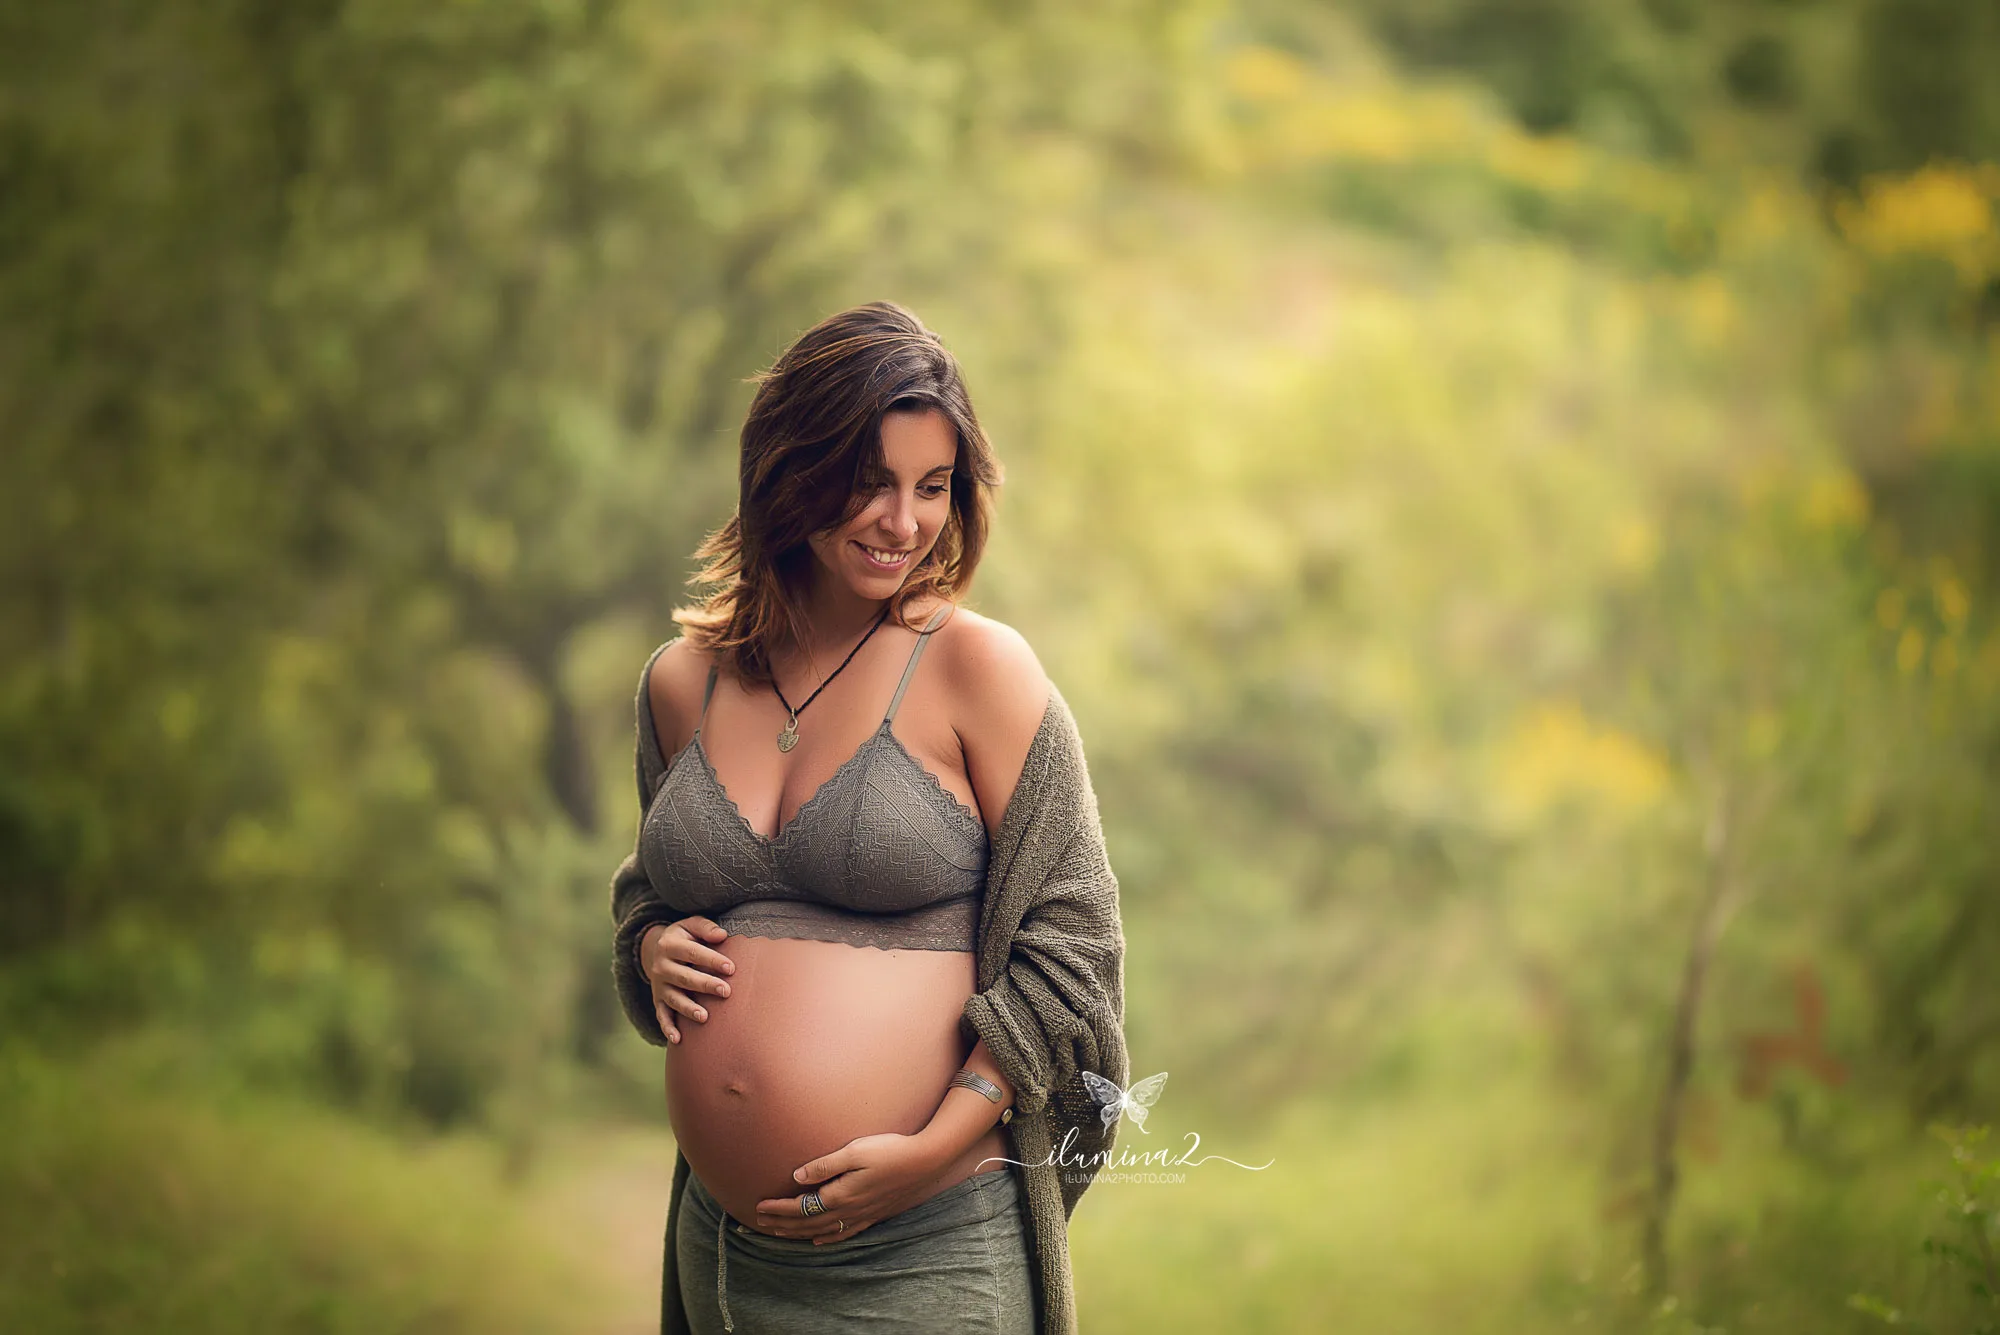 estimular Transeúnte Sympton Ropa para sesión de fotos de embarazada • ilumina2 photo